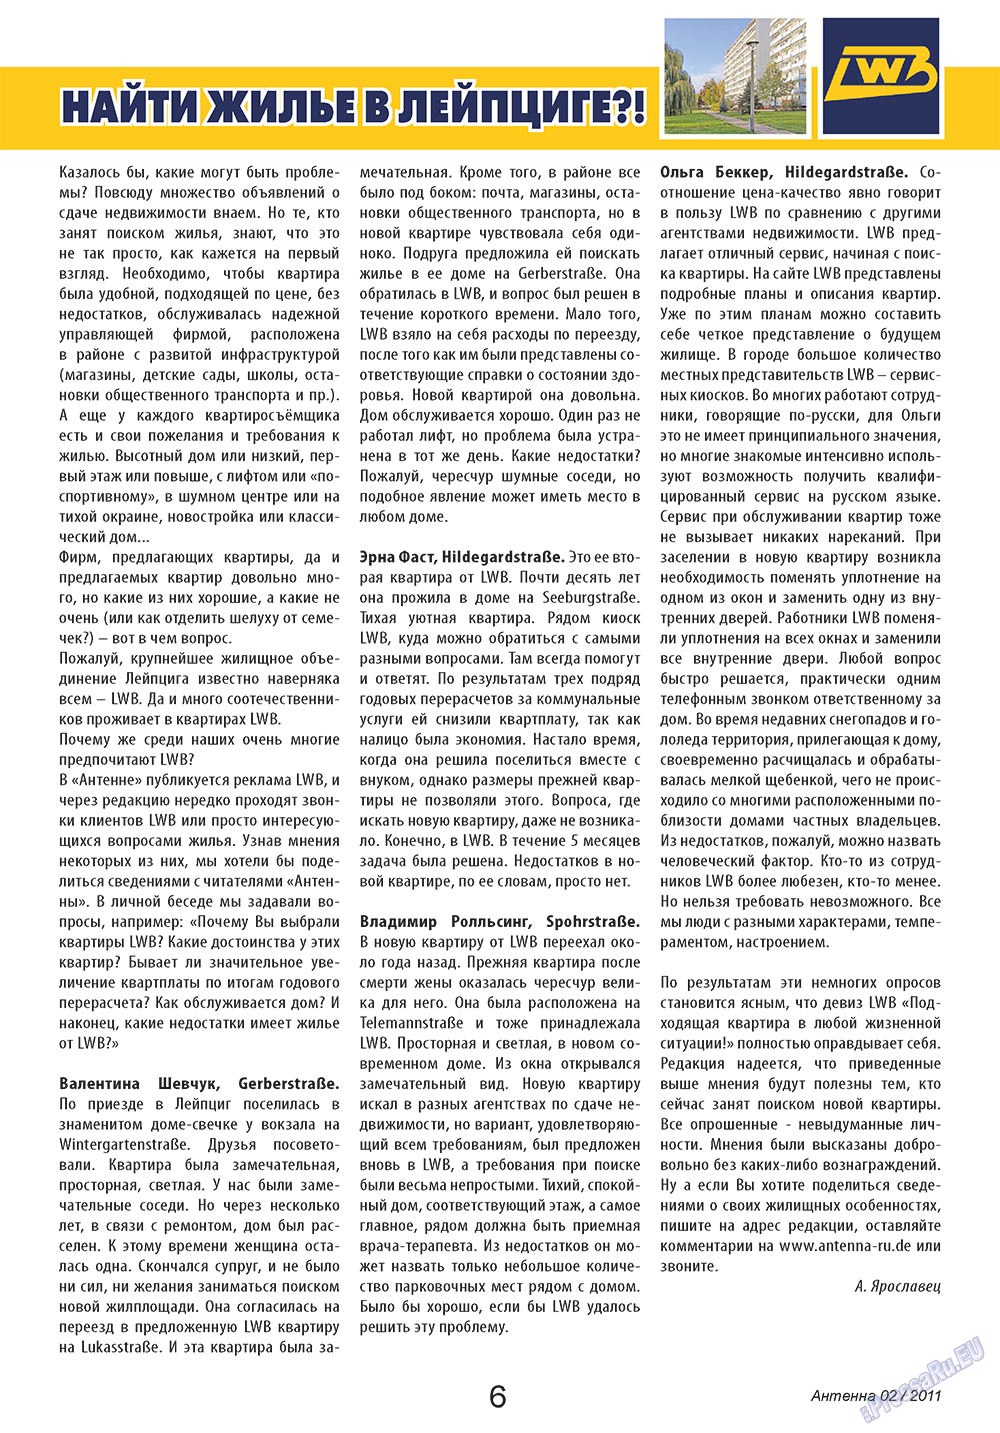 Антенна (журнал). 2011 год, номер 2, стр. 6